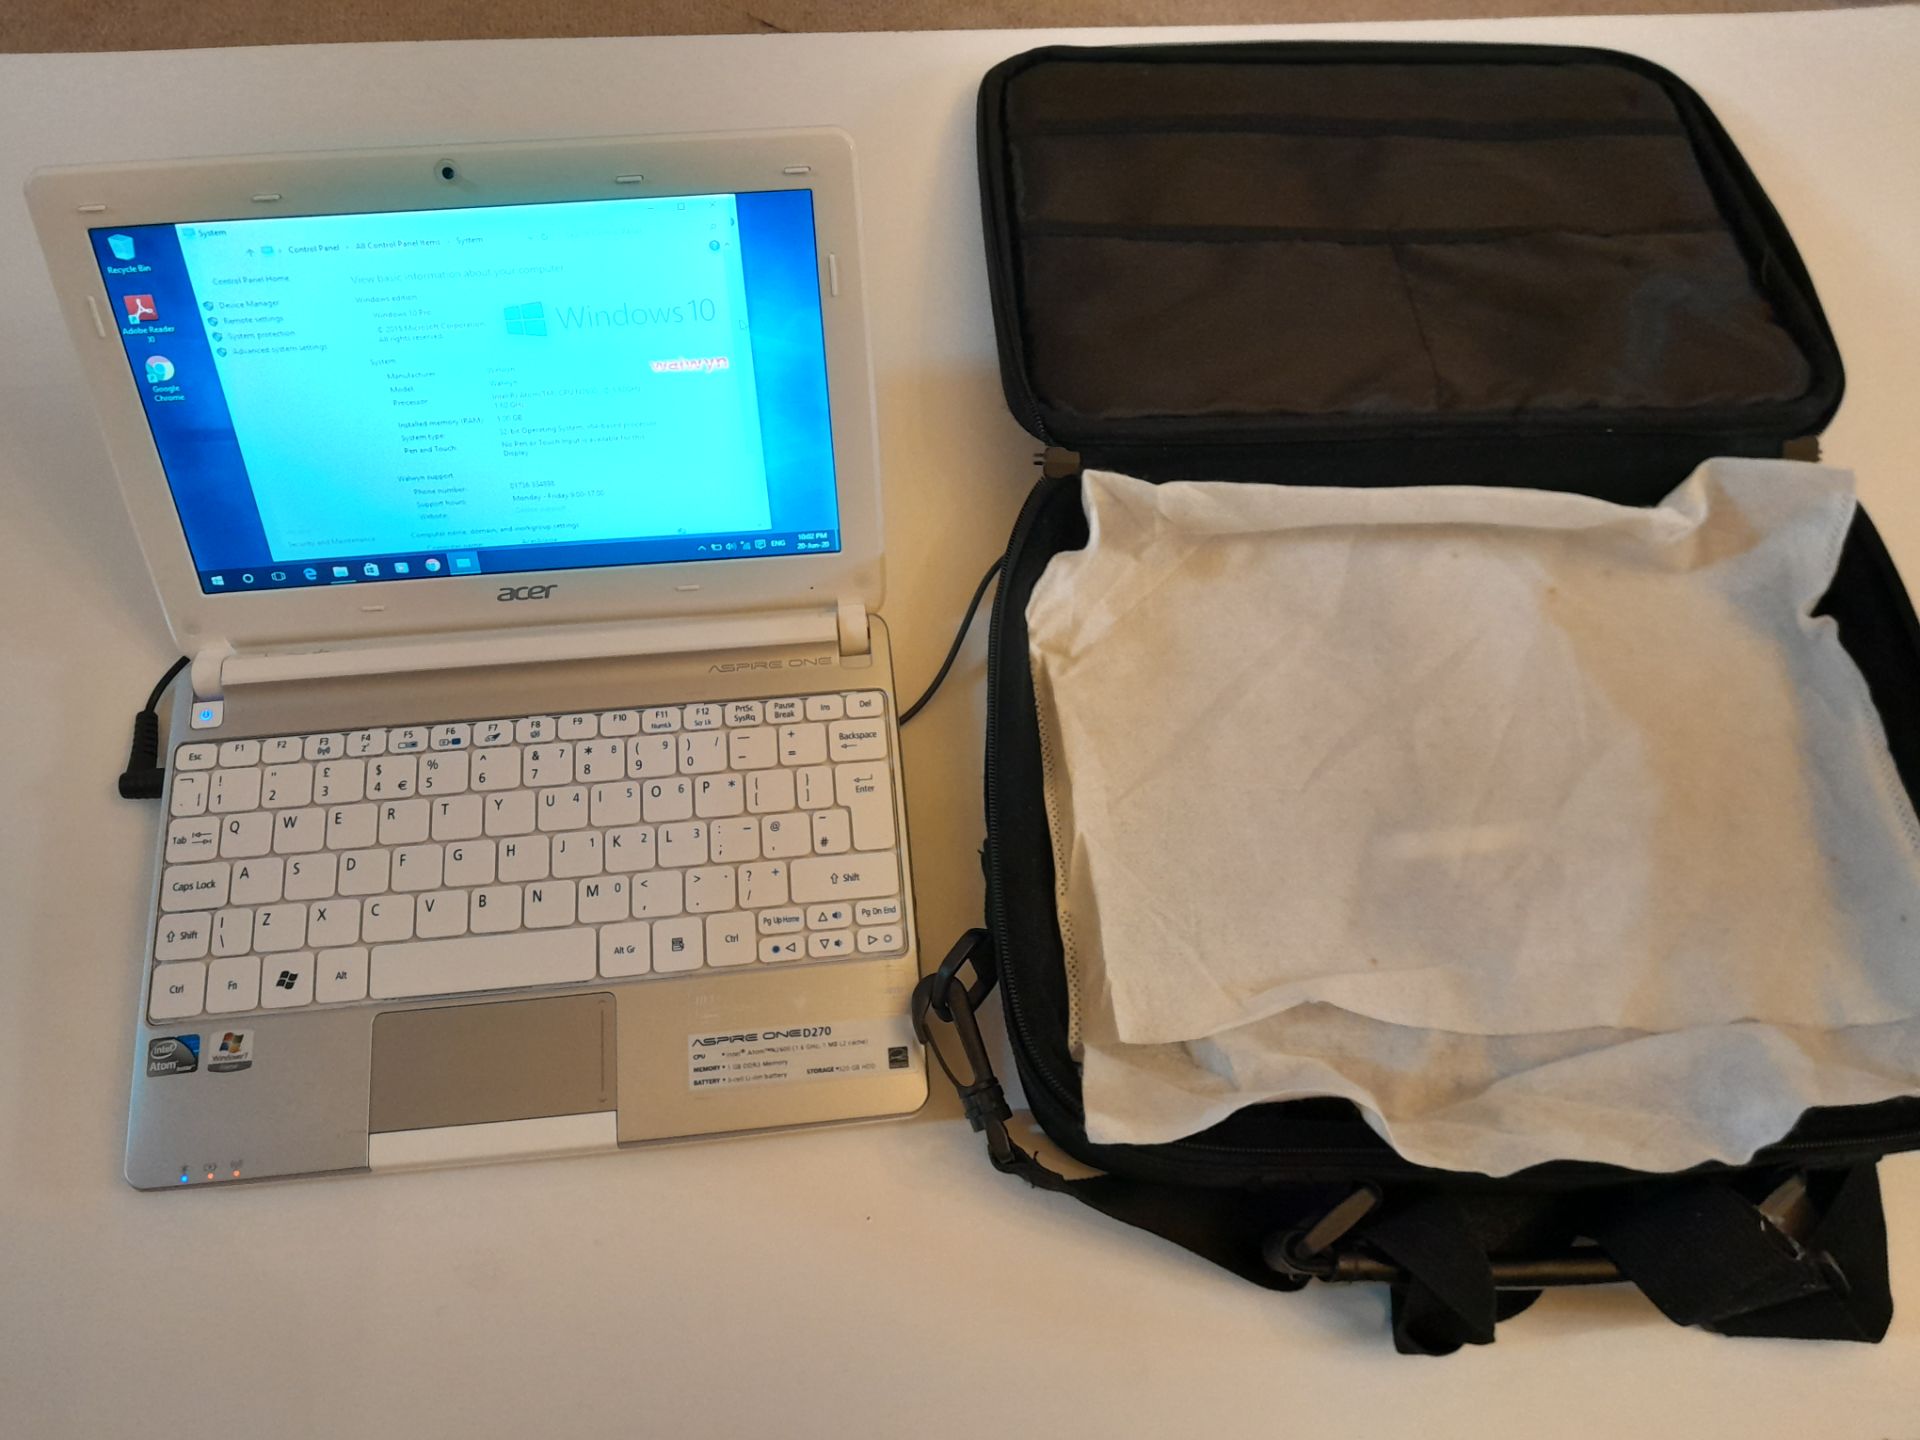 Acer Aspire One D270 Mini Laptop, Intel Atom N260, 1GB Ram, 320GB HDD, Windows 10 Pro, with